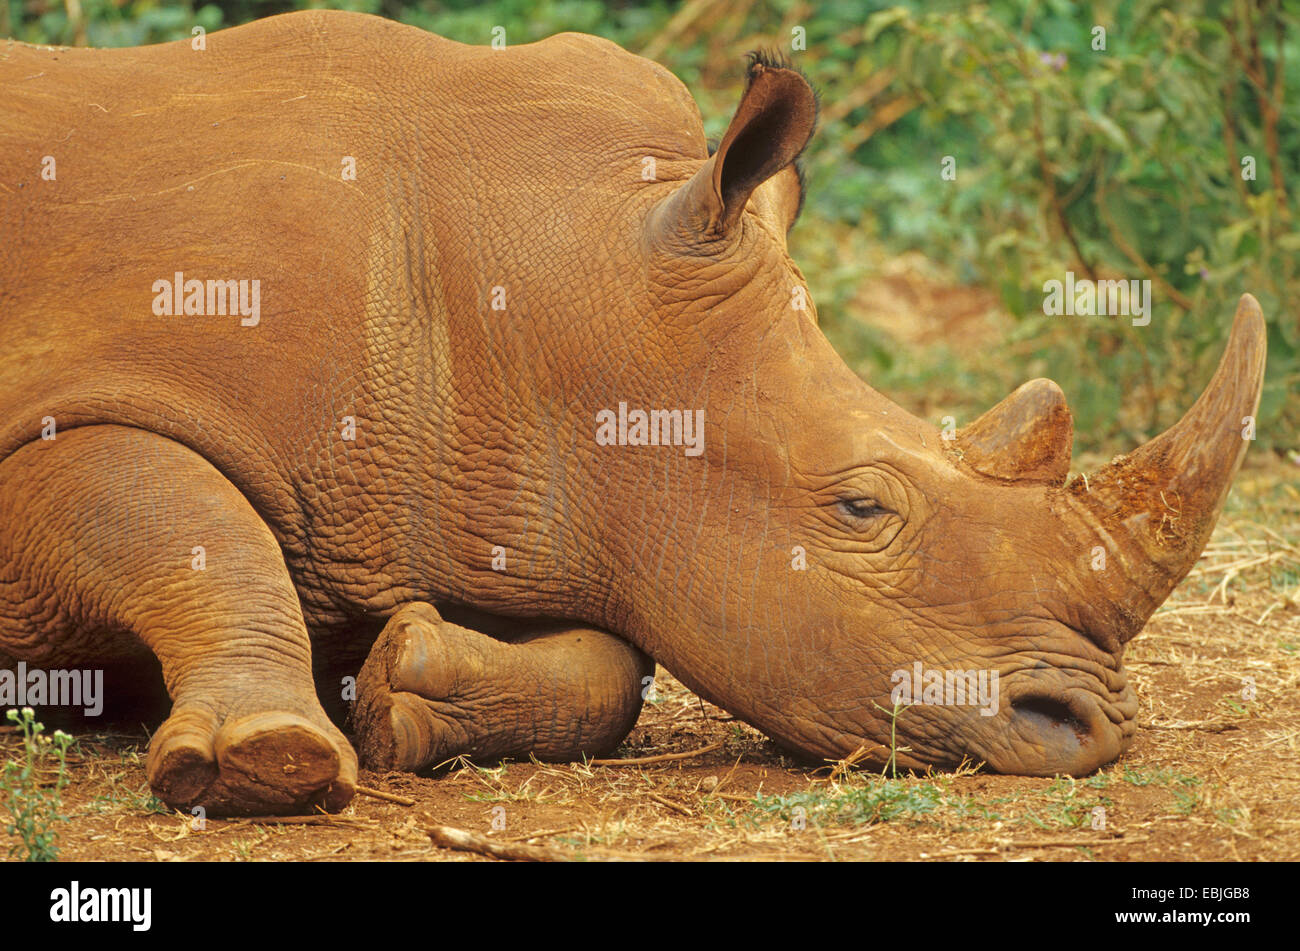 Rinoceronte bianco, quadrato-rhinoceros a labbro, erba rinoceronte (Ceratotherium simum), giacente sul terreno, sonnecchia, Kenya Foto Stock